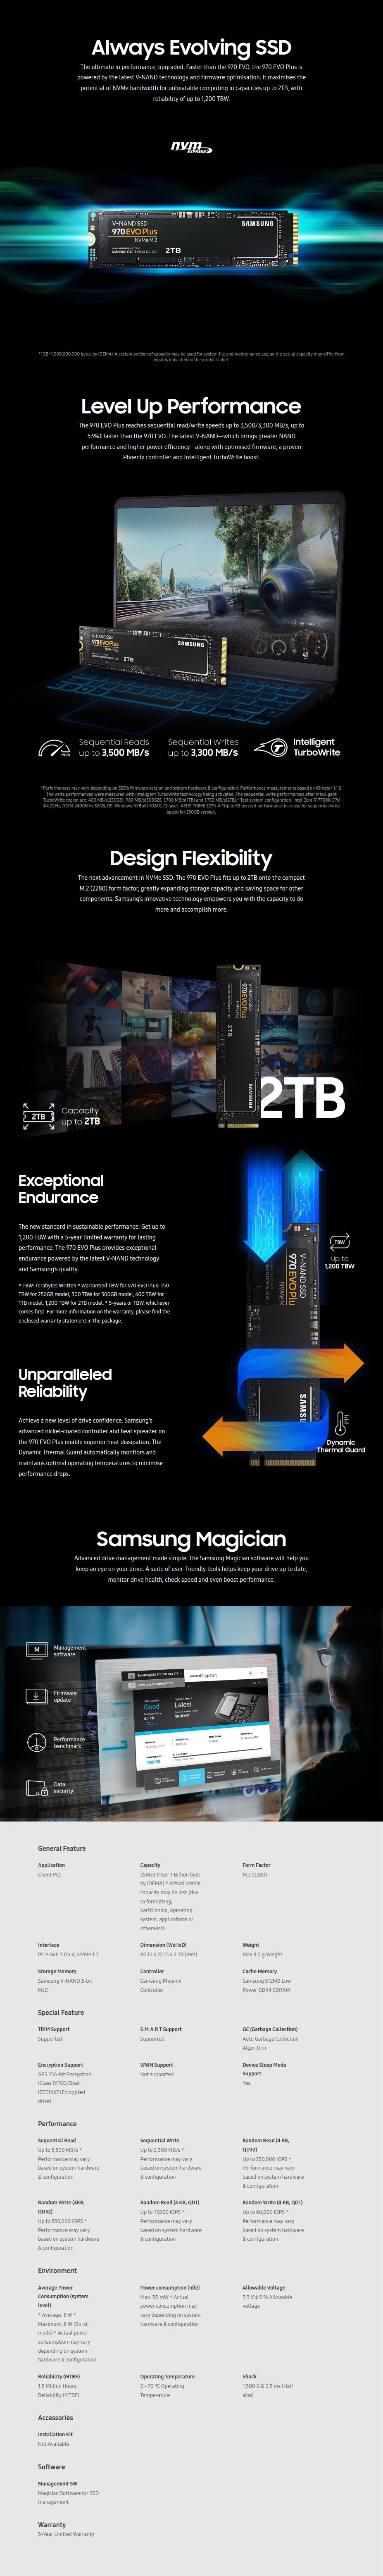 Samsung 970 EVO Plus 250GB NVMe 1.3 M.2 (2280) 3-Bit V-NAND SSD - MZ-V7S250BW - Desktop Overview 2